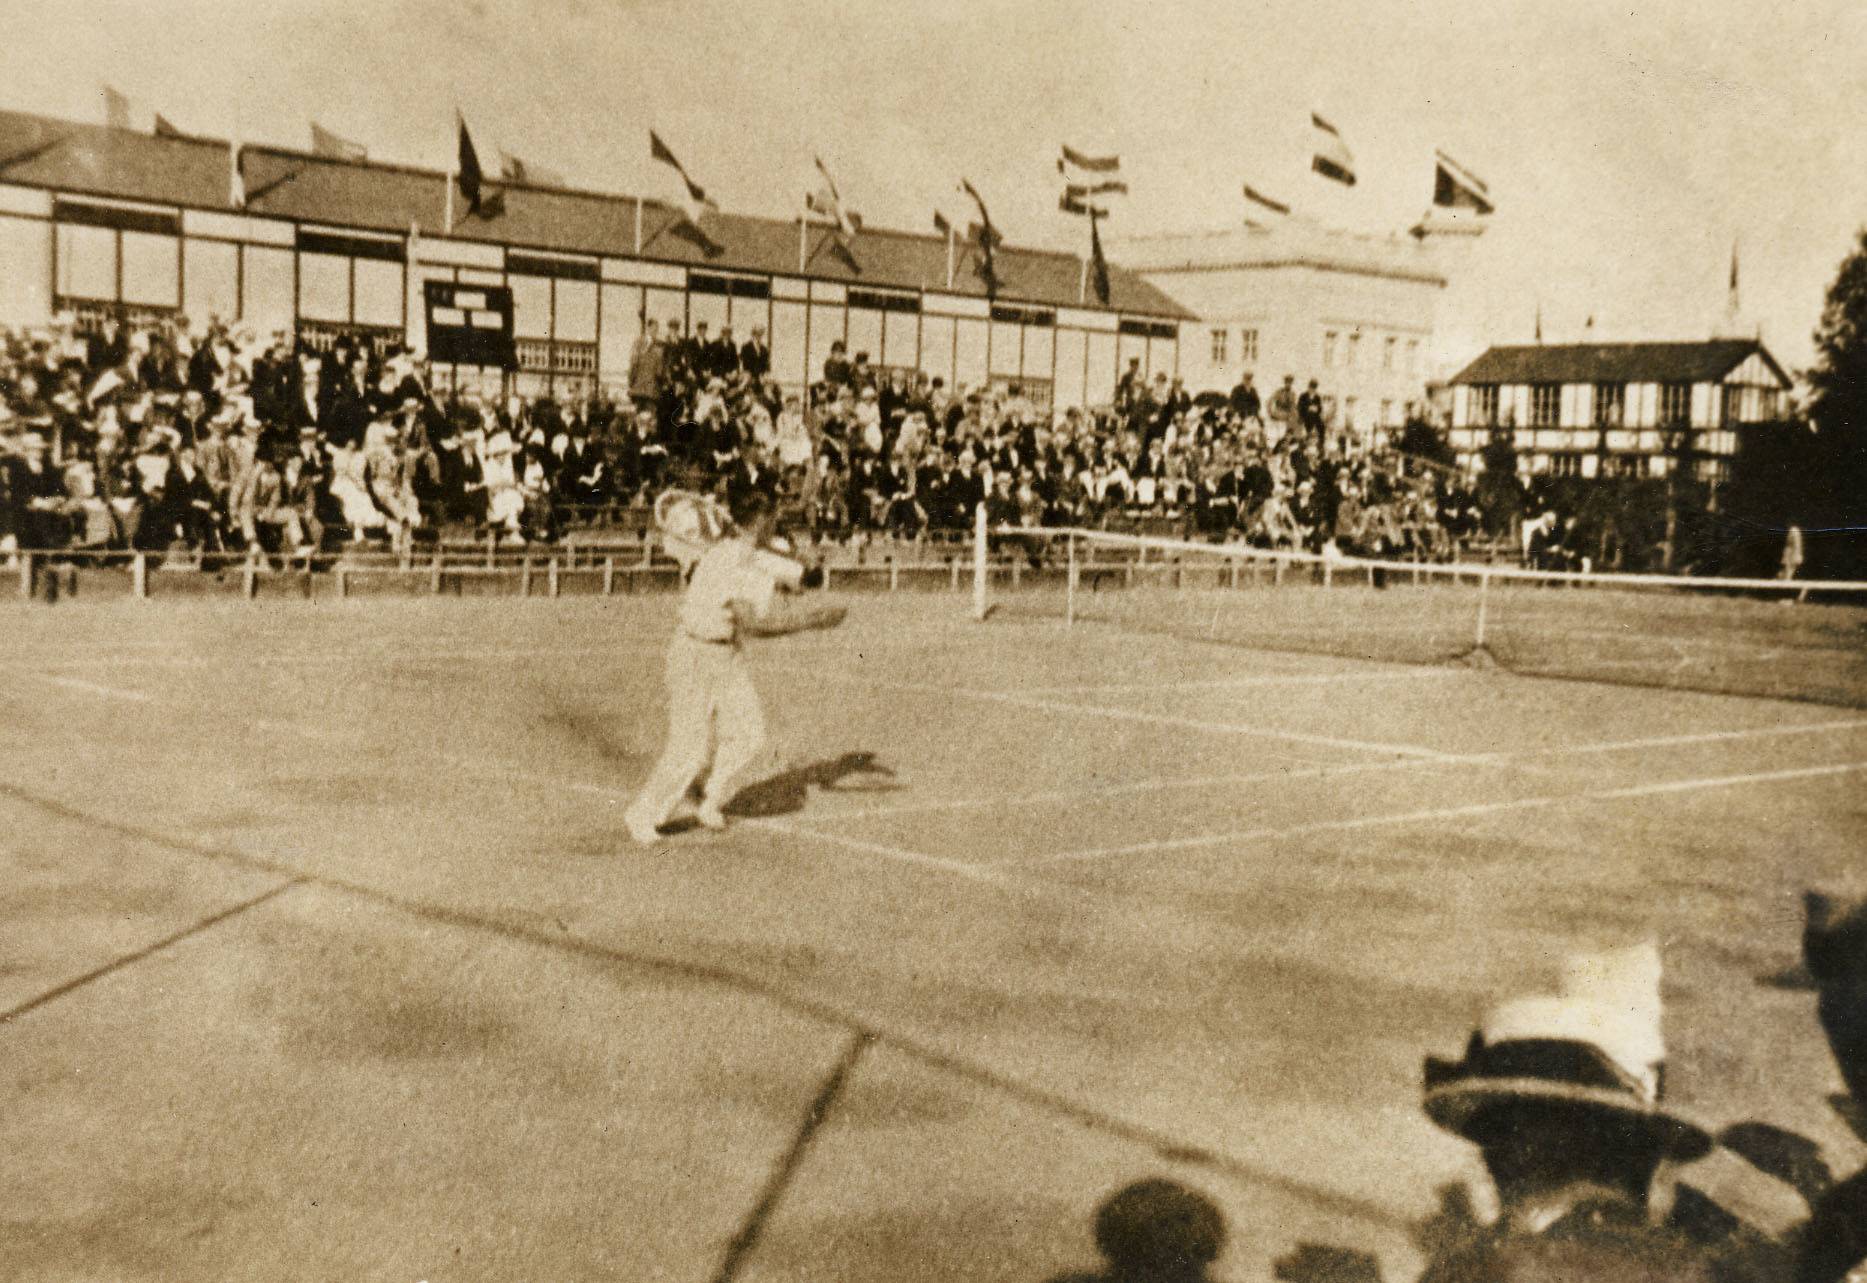 Ichiya Kumagai (front) competes in the men's singles tennis tournament at the 1920 Olympics in Antwerp, Belgium. | JAPAN TENNIS ASSOCIATION / VIA KYODO